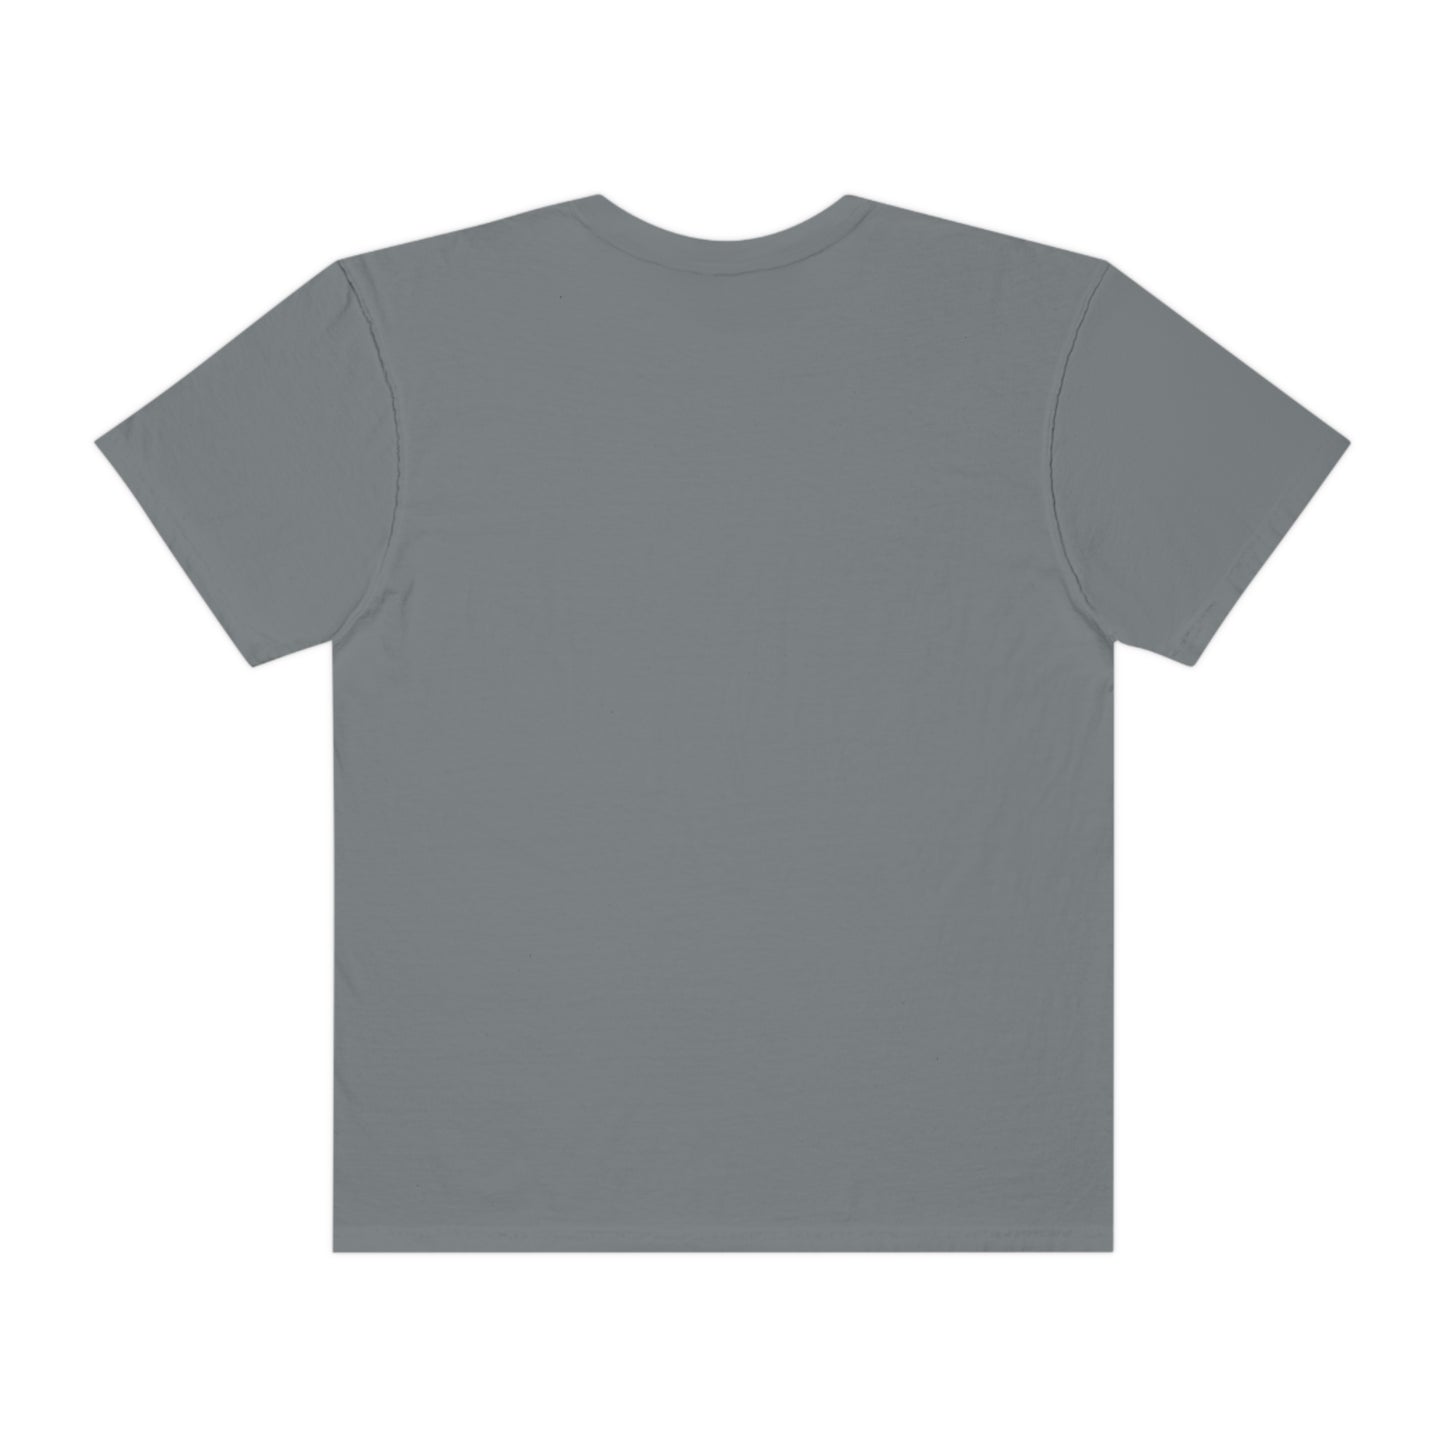 Throwback Chicago Bulls Basketball Unisex Garment-Dyed T-shirt